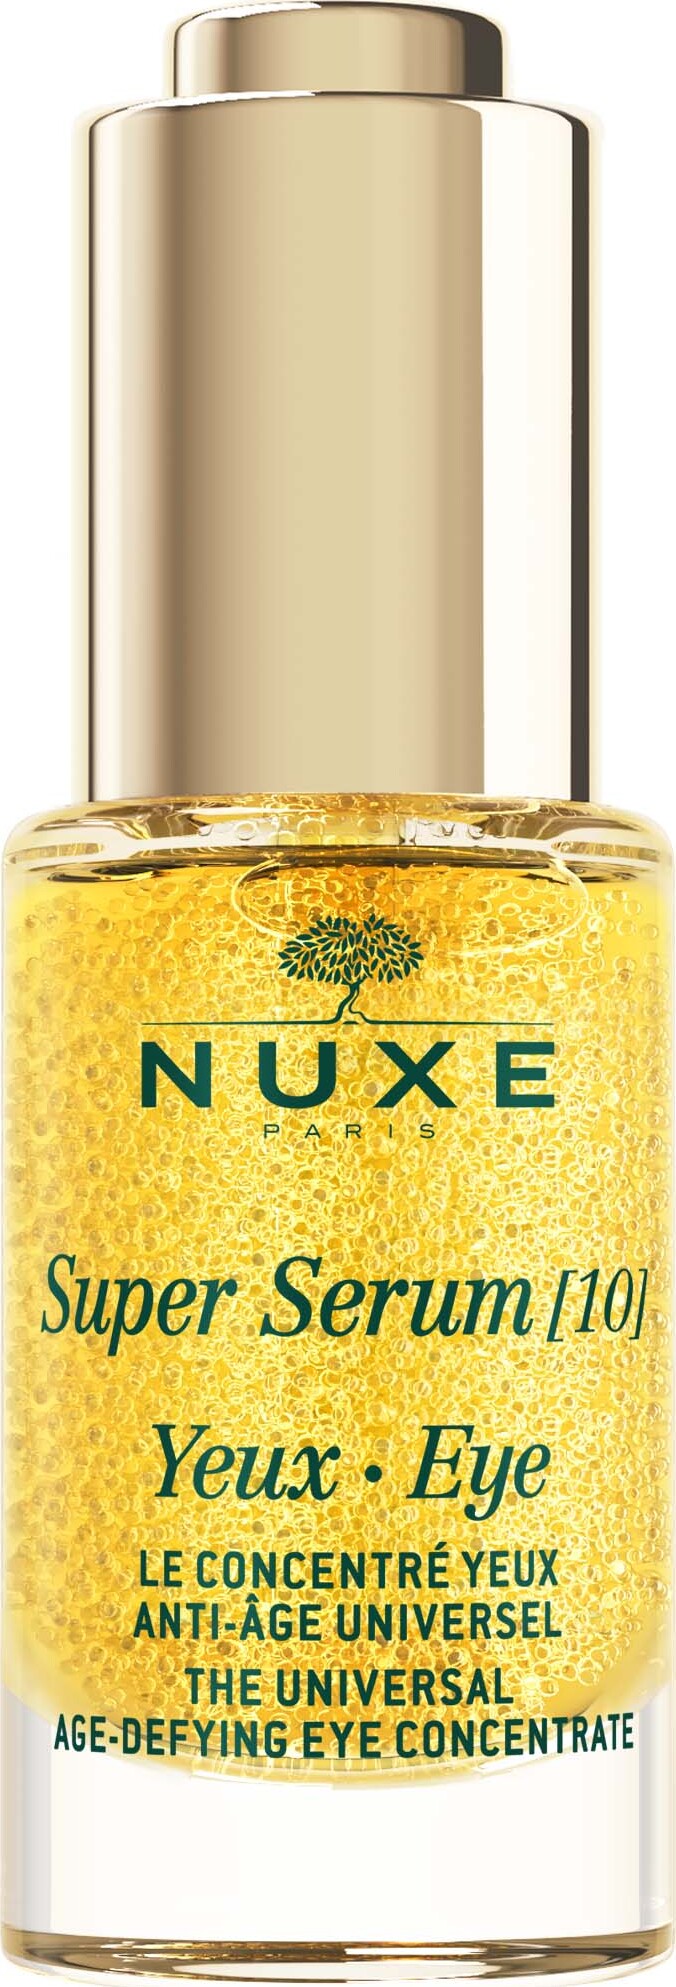 Se Nuxe Super Serum (10) Eye, 15ml. hos Gucca.dk